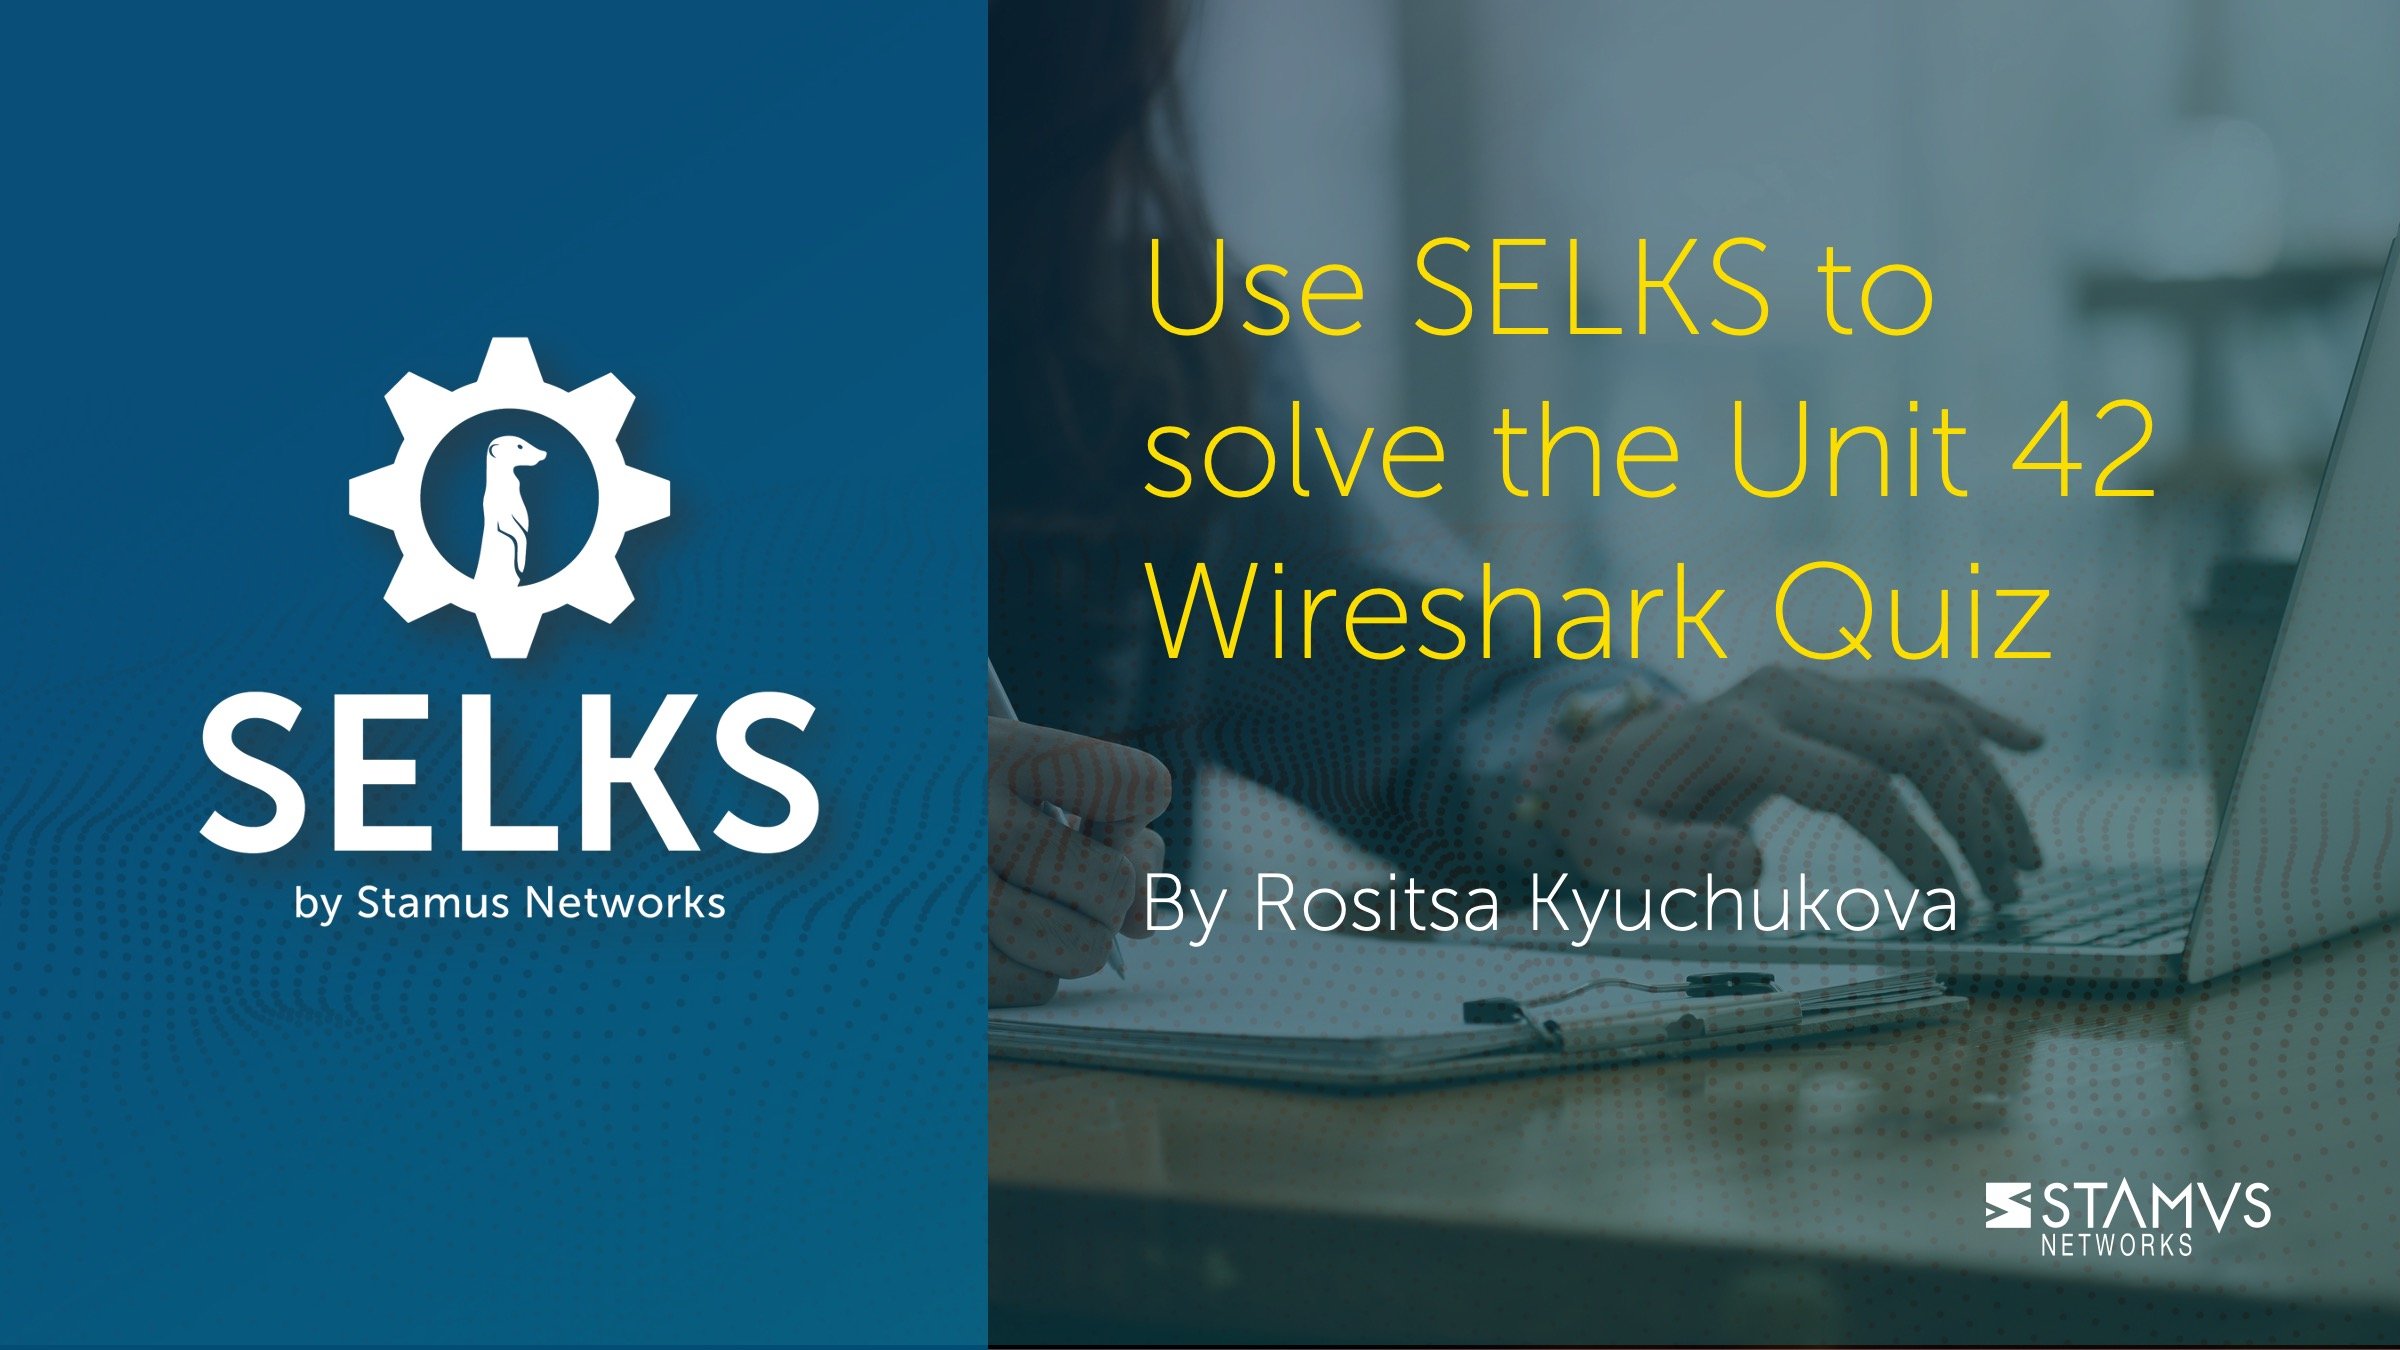 Use SELKS to Solve the Unit 42 Wireshark Quiz by Rosita Kyuchukova